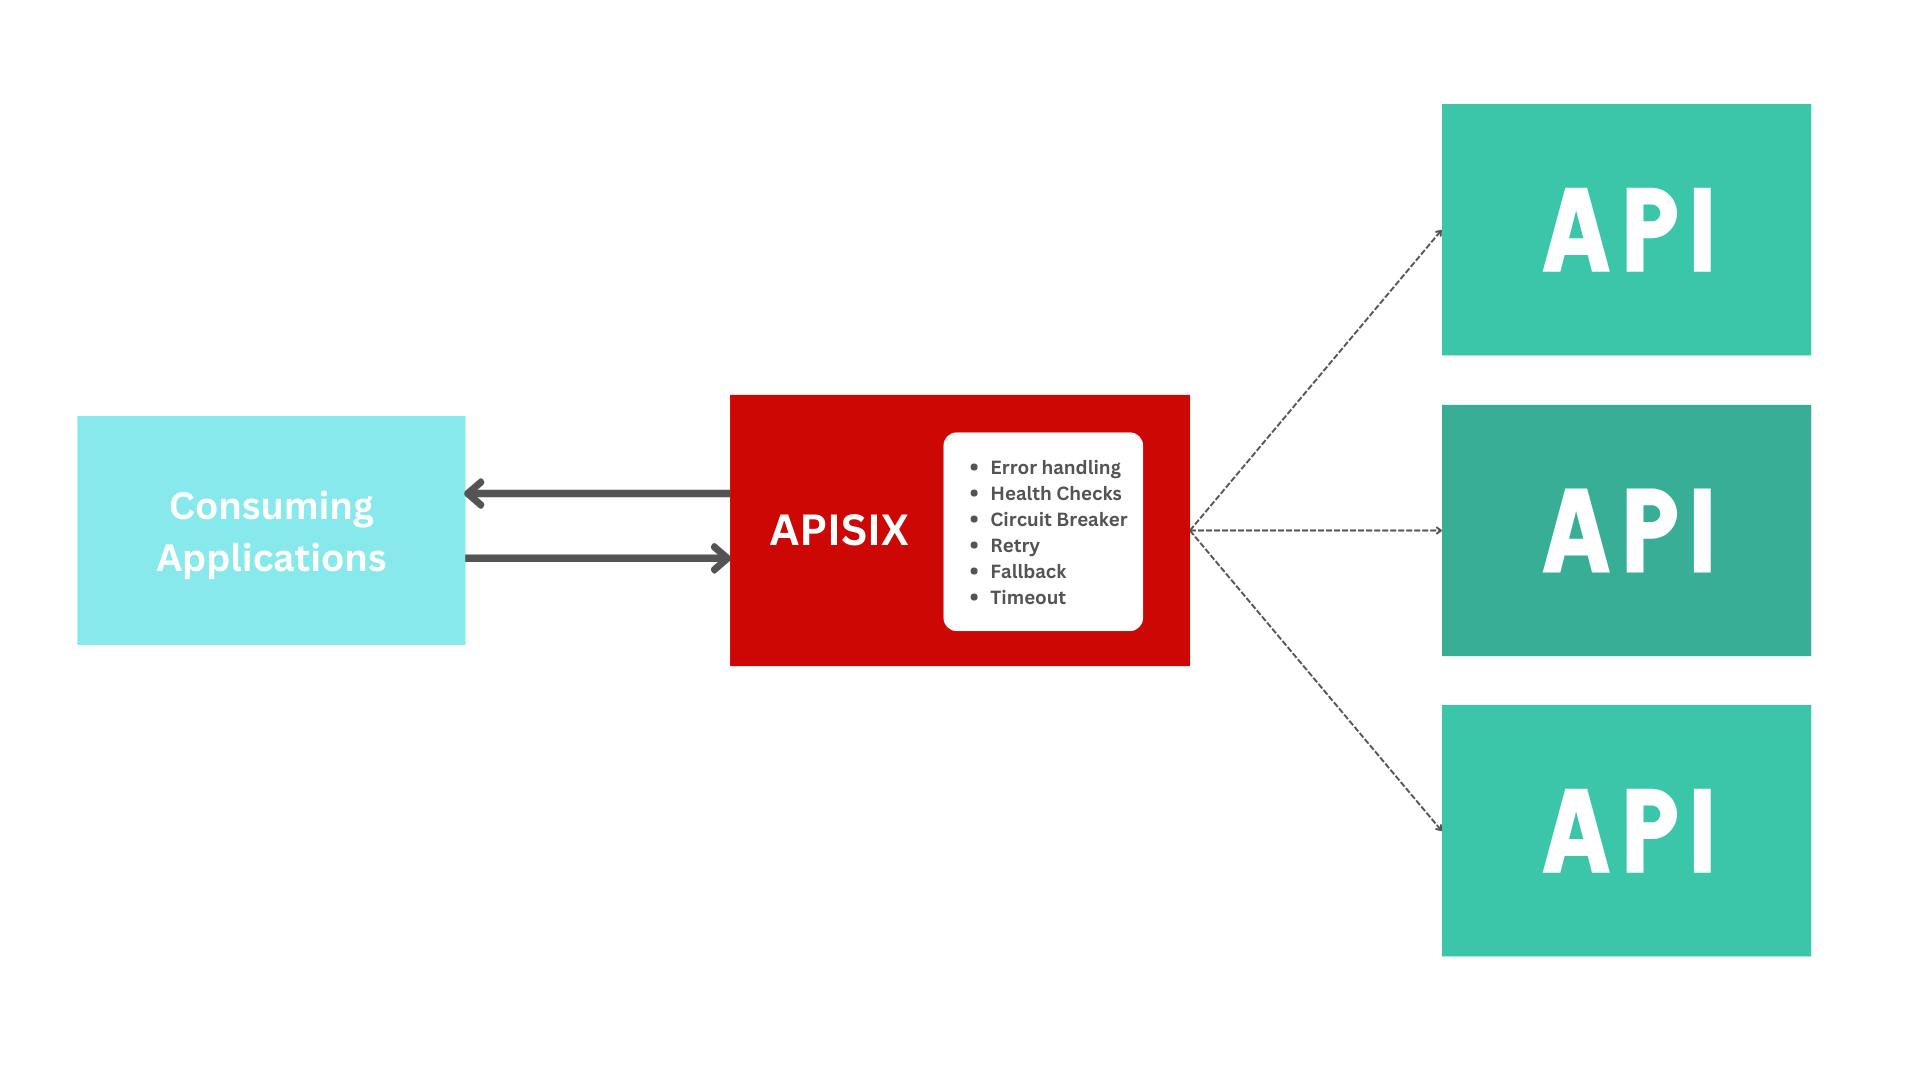 API Fault handling with Apache APISIX